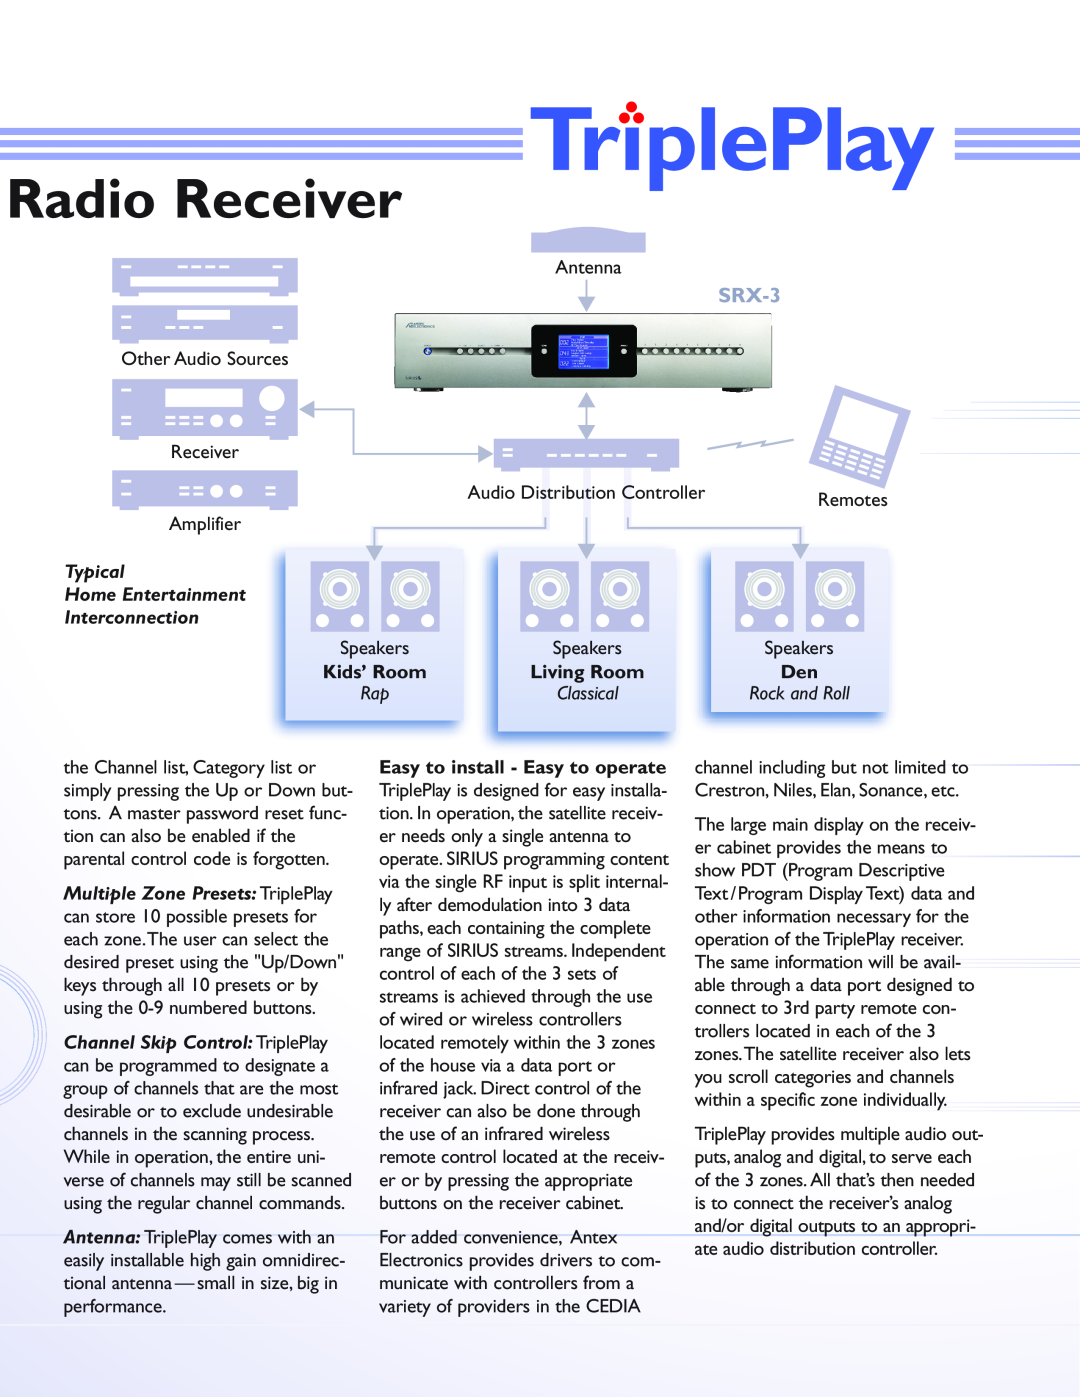 Sirius Satellite Radio audio satellite receiver manual Radio Receiver, Typical, Home Entertainment, Interconnection, SRX-3 